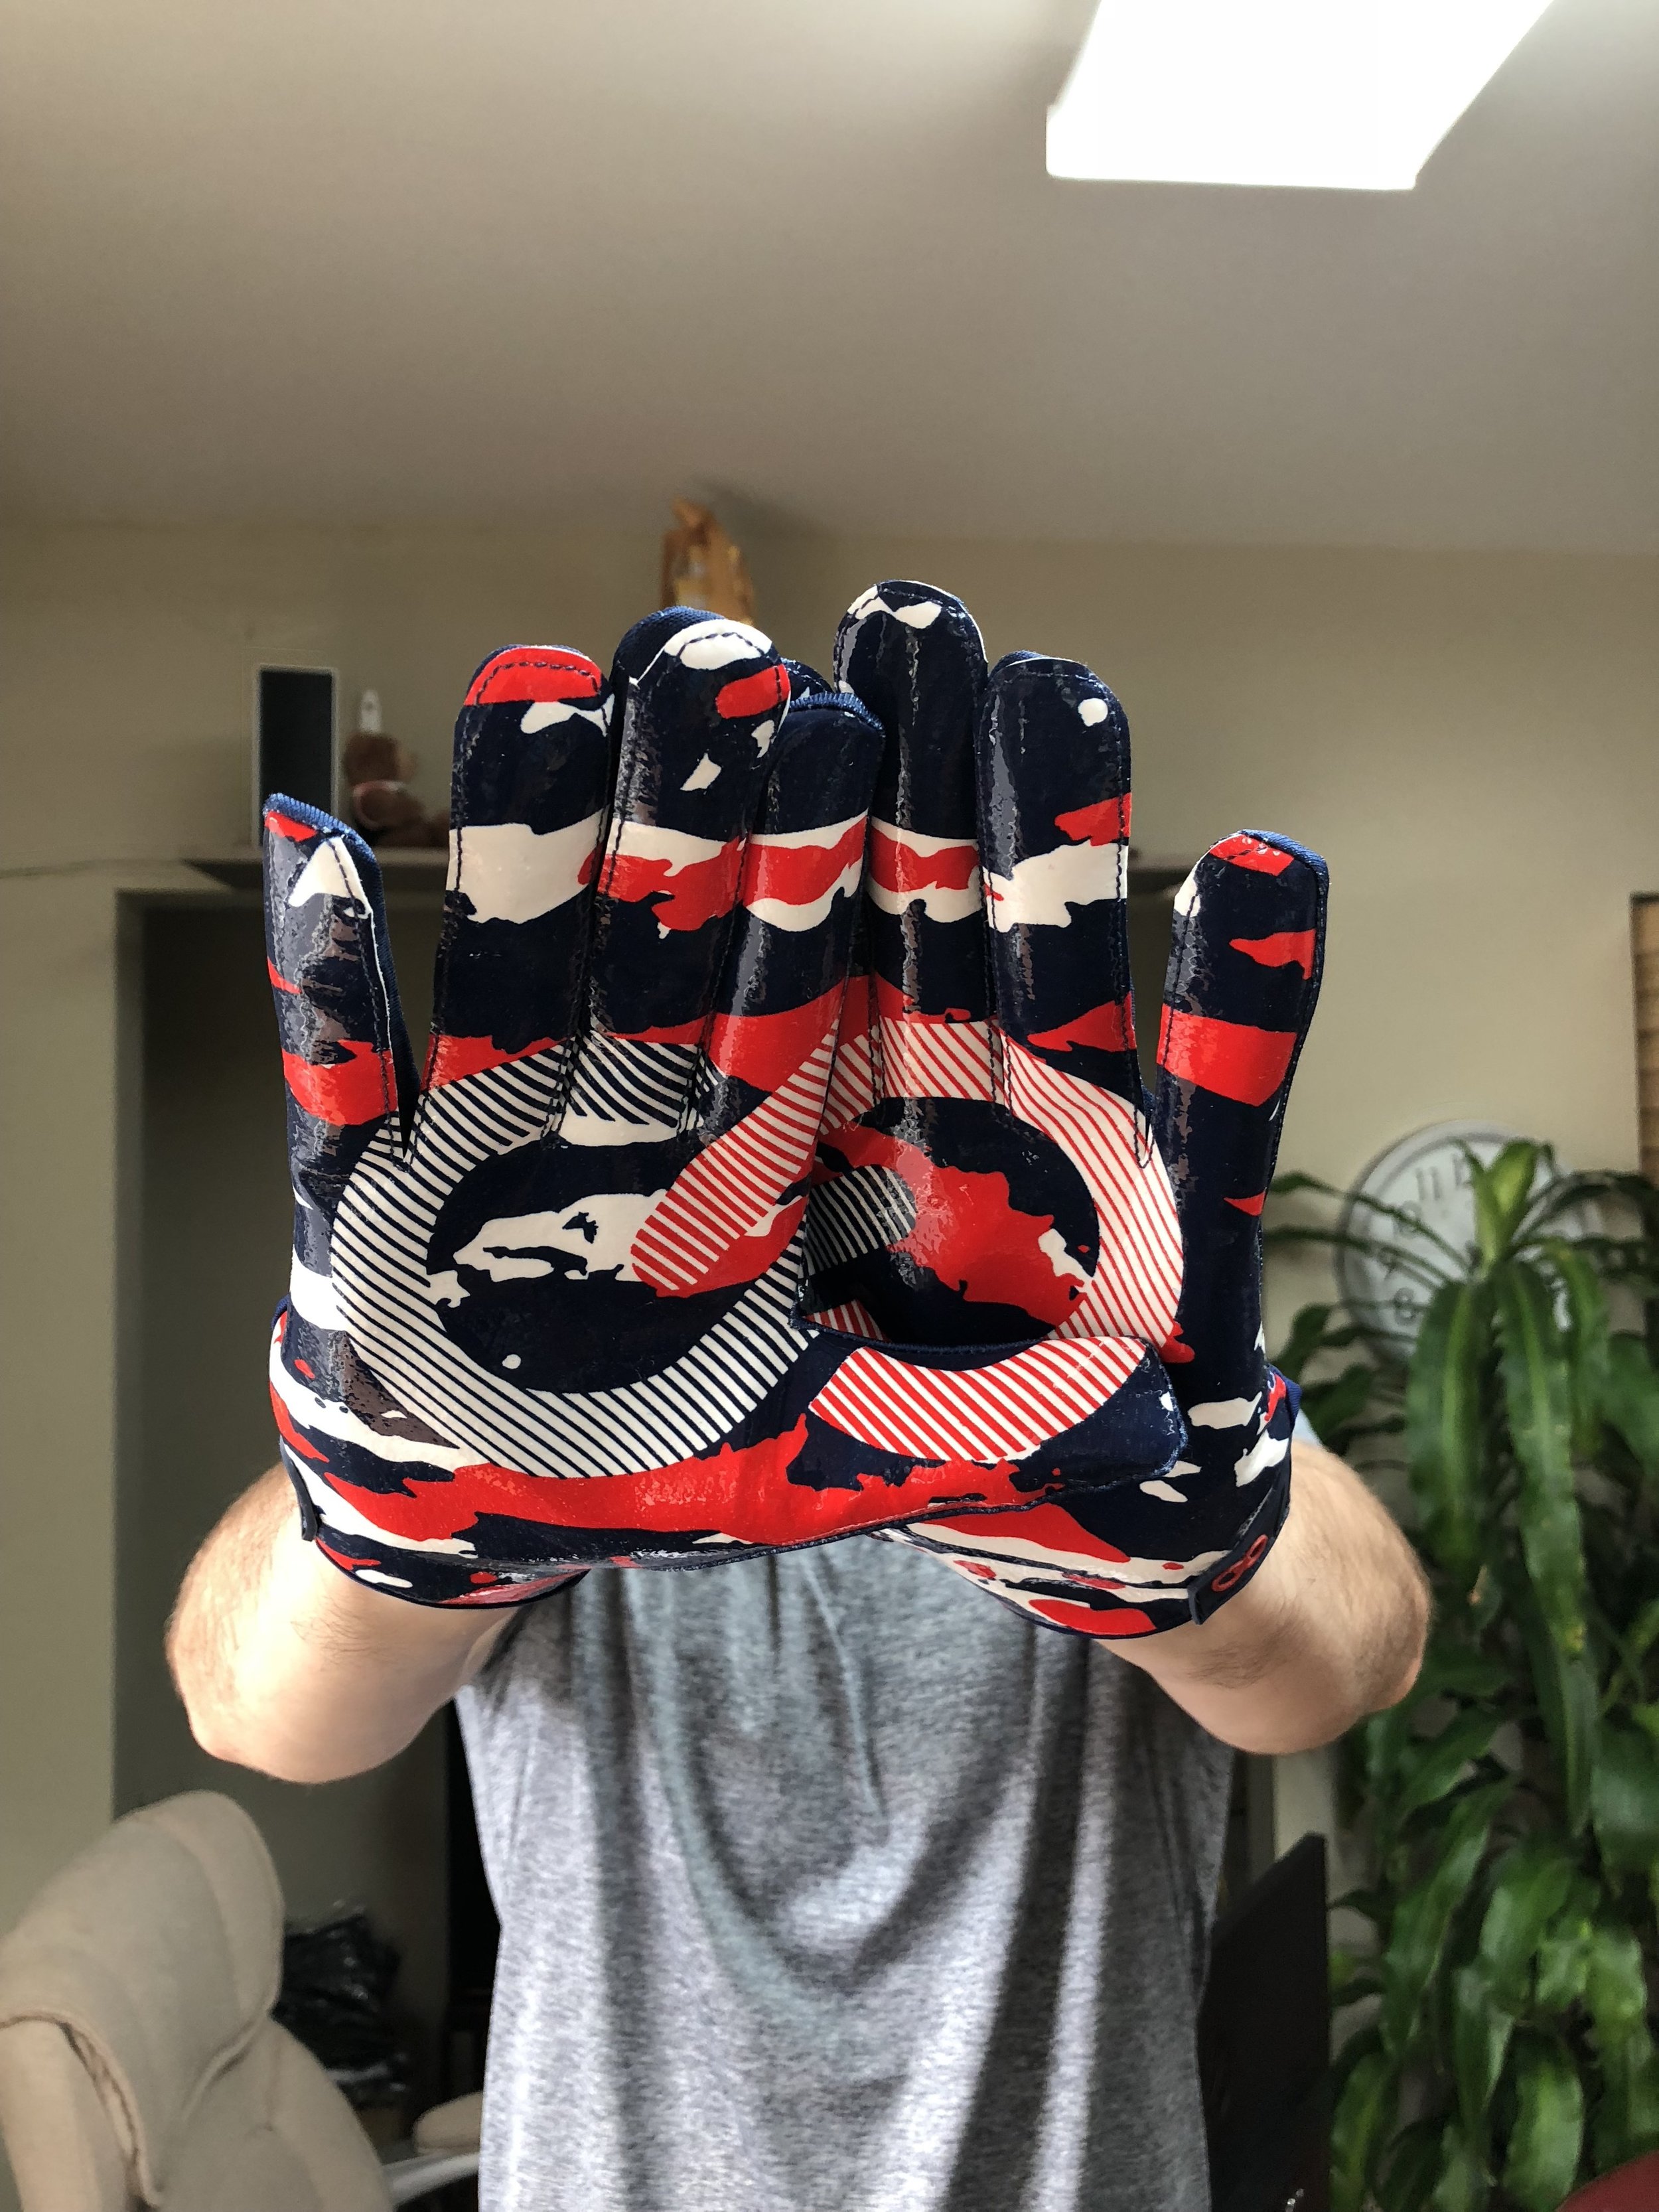 Custom Football Gloves, Receiver Gloves 